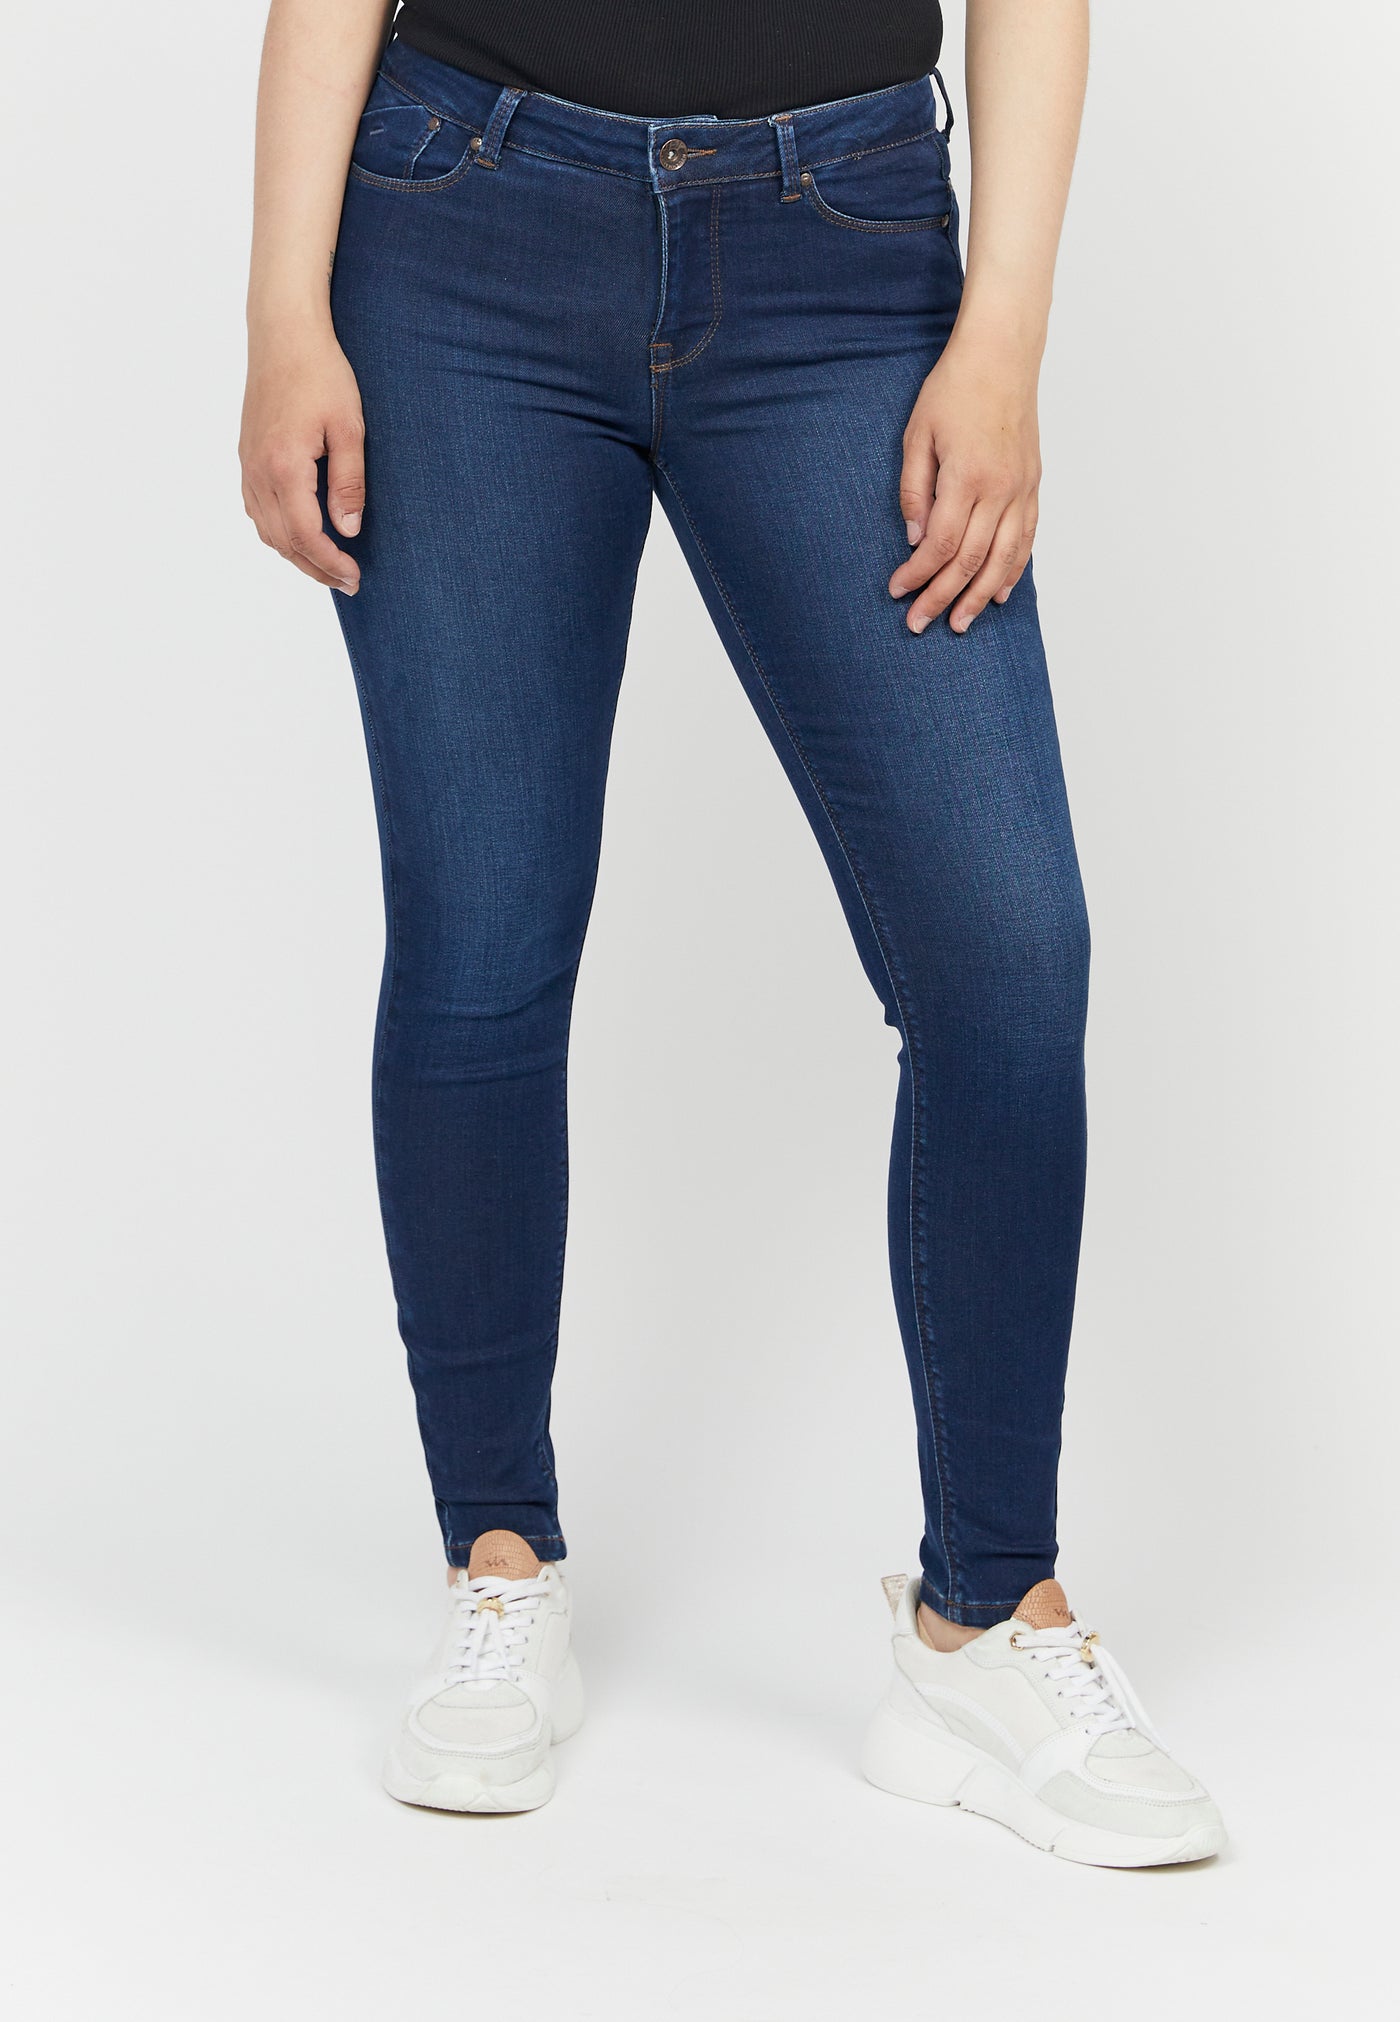 Jeans Liza Skinny Legs - Indigo Blue